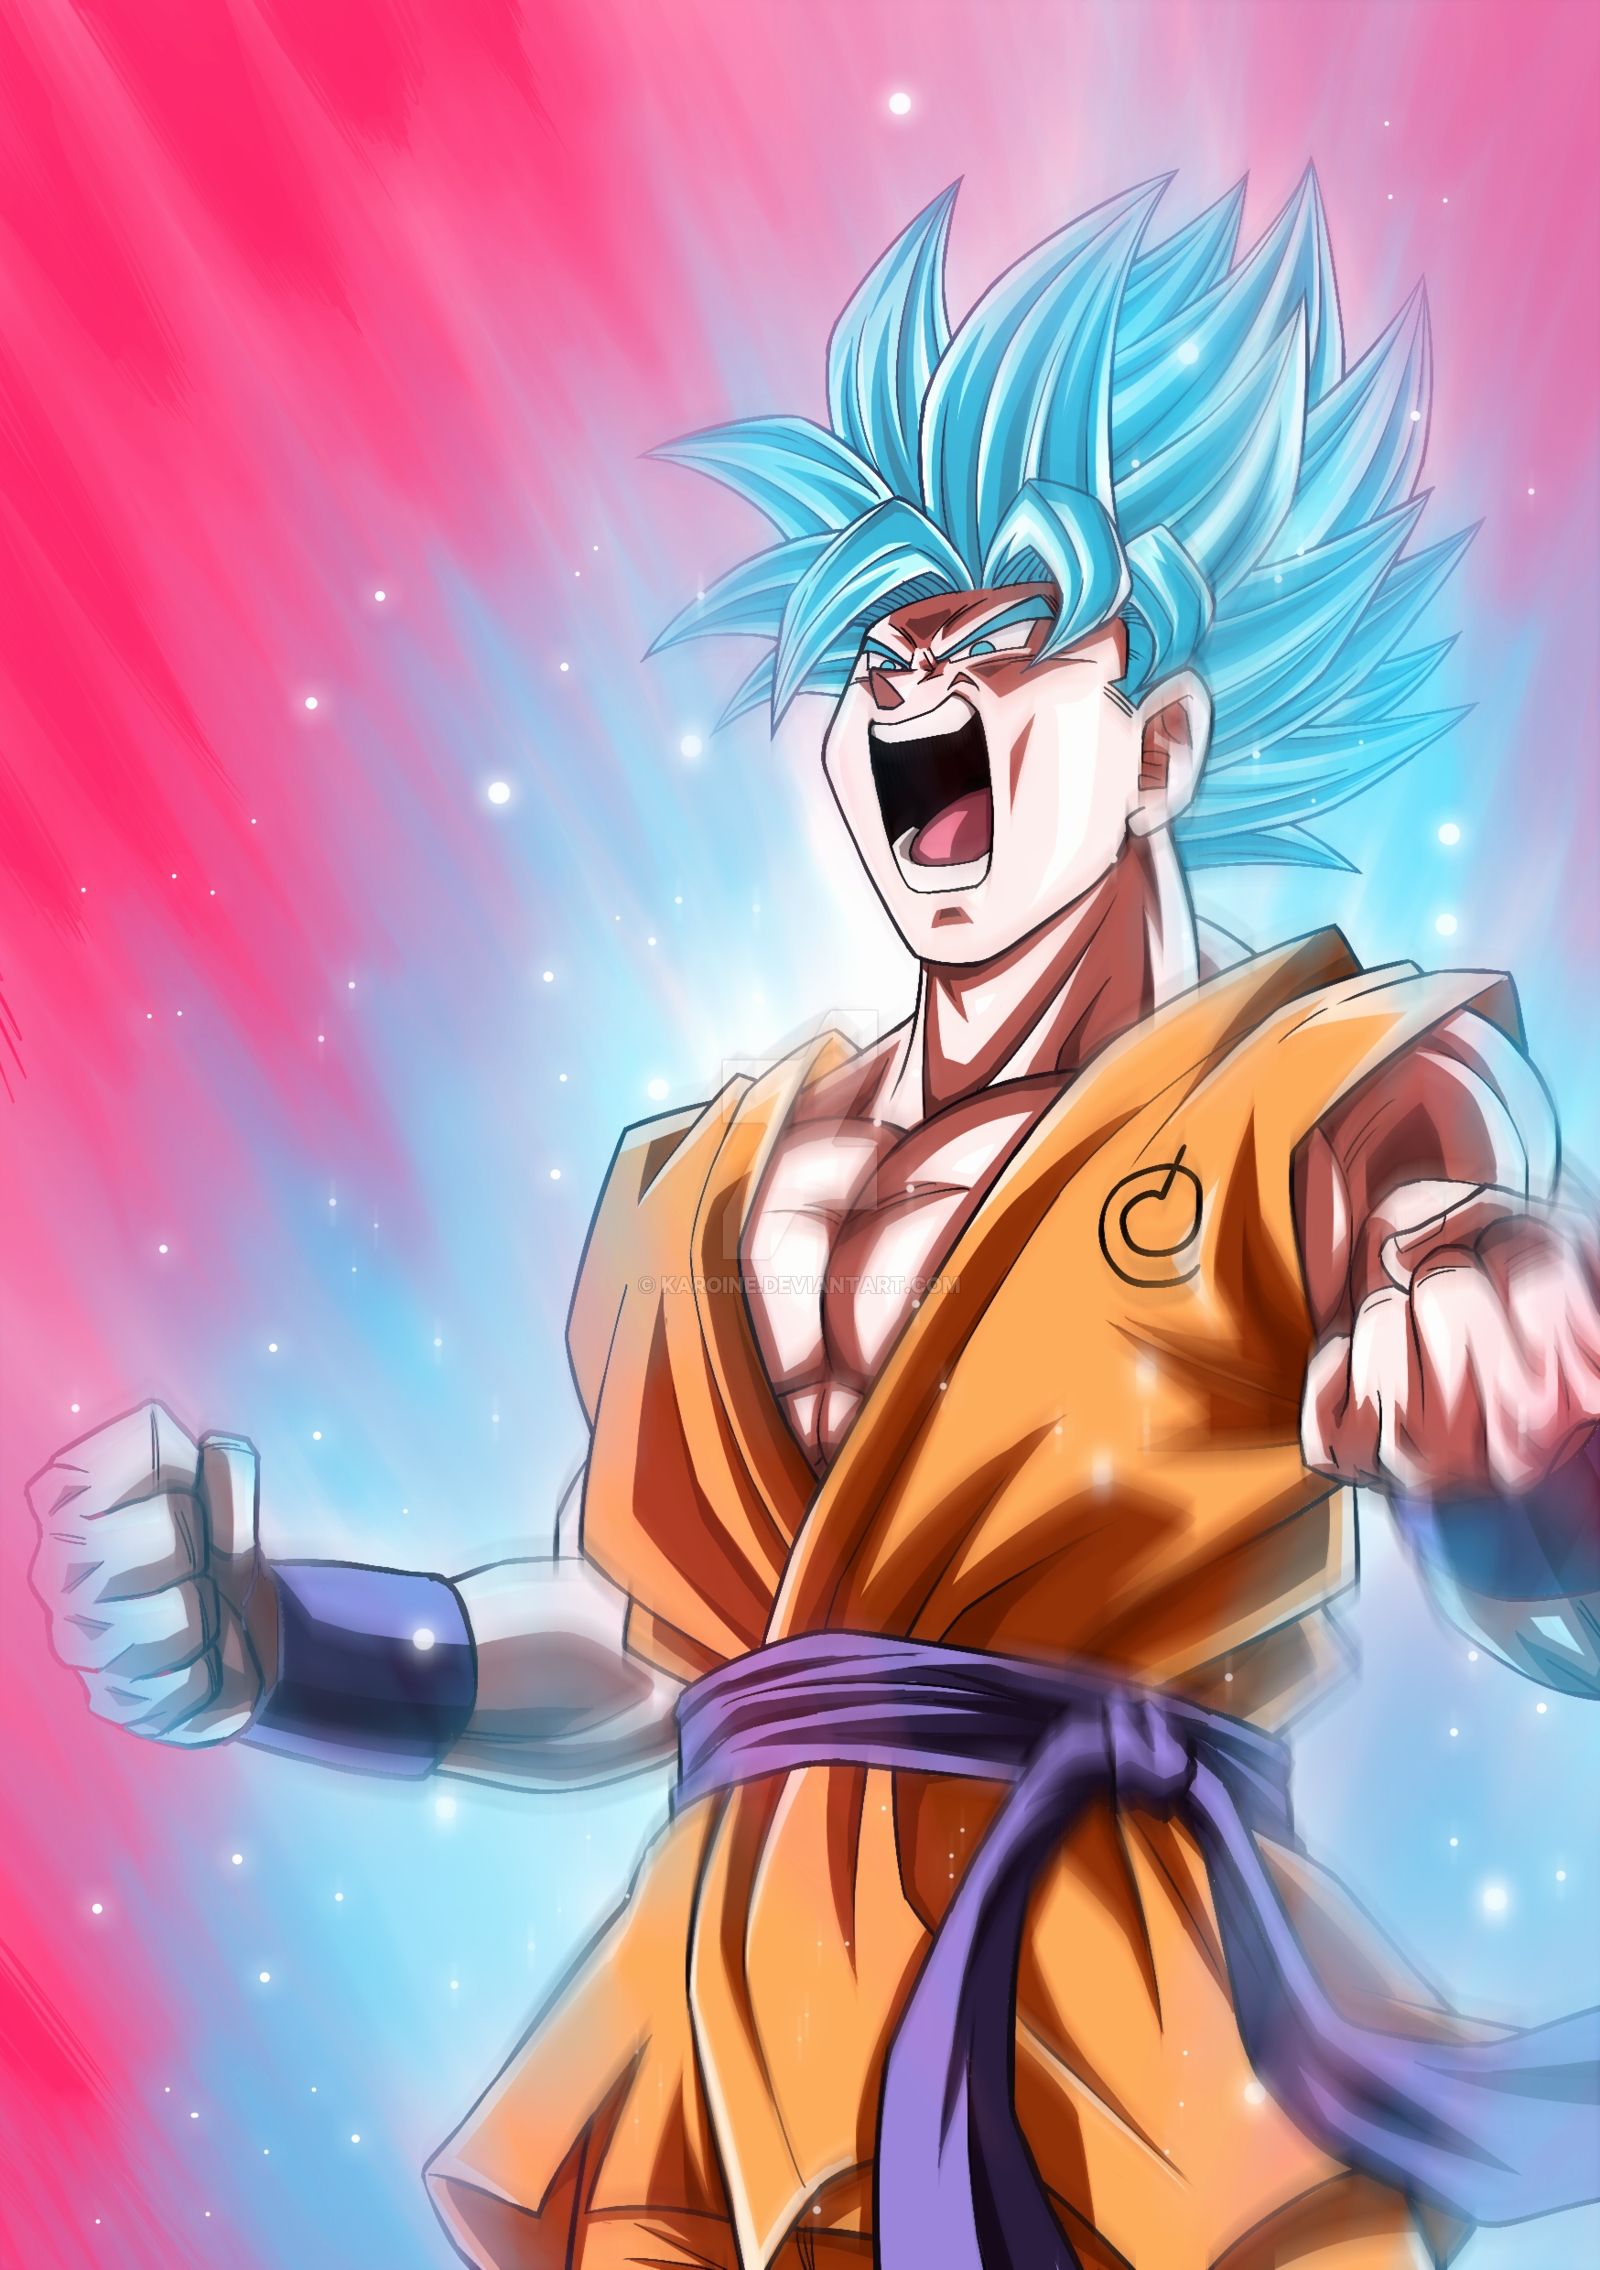 Inspirational Super Saiyan Blue Goku Wallpaper Inspiration